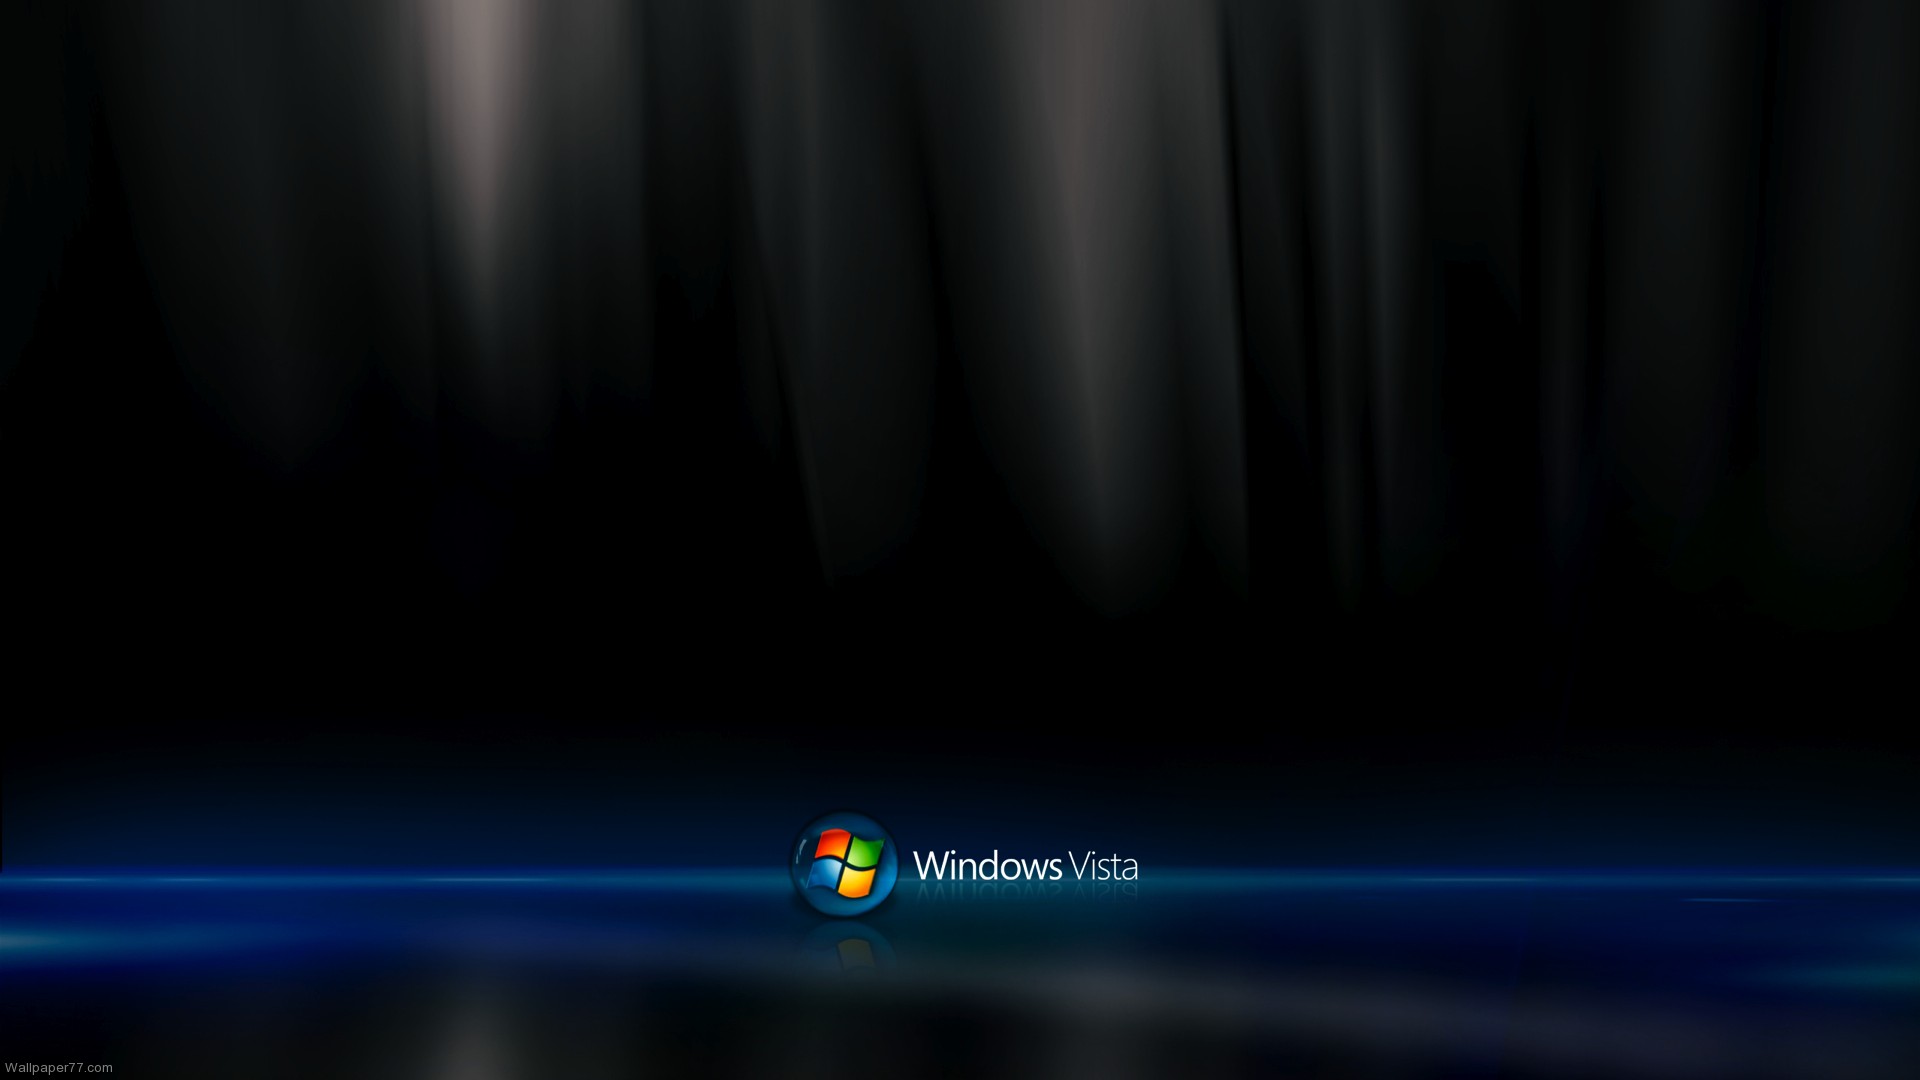 Windows Vista Desktop Wallpaper In HD